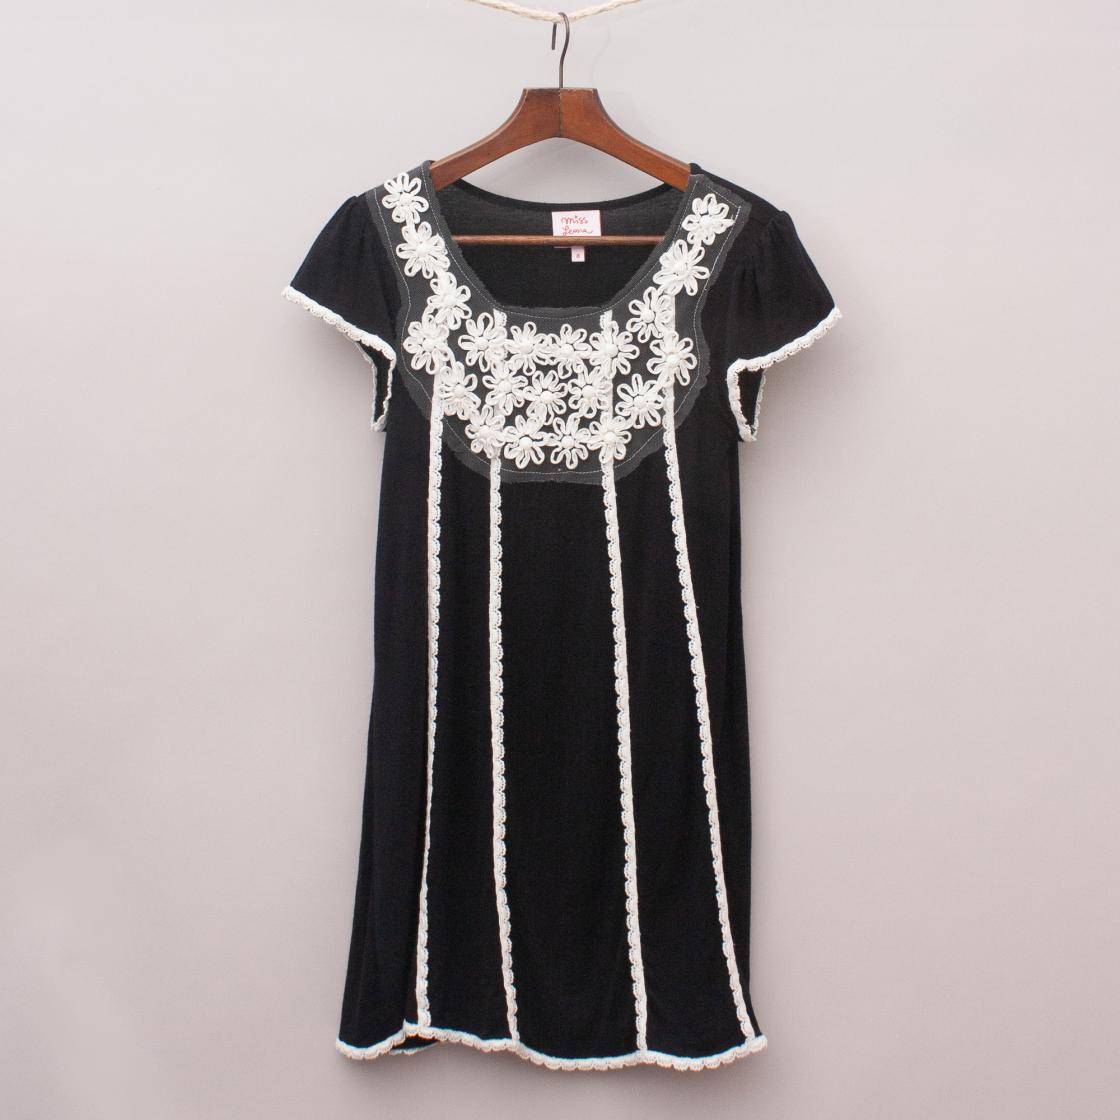 Miss Leona Embroidered Dress